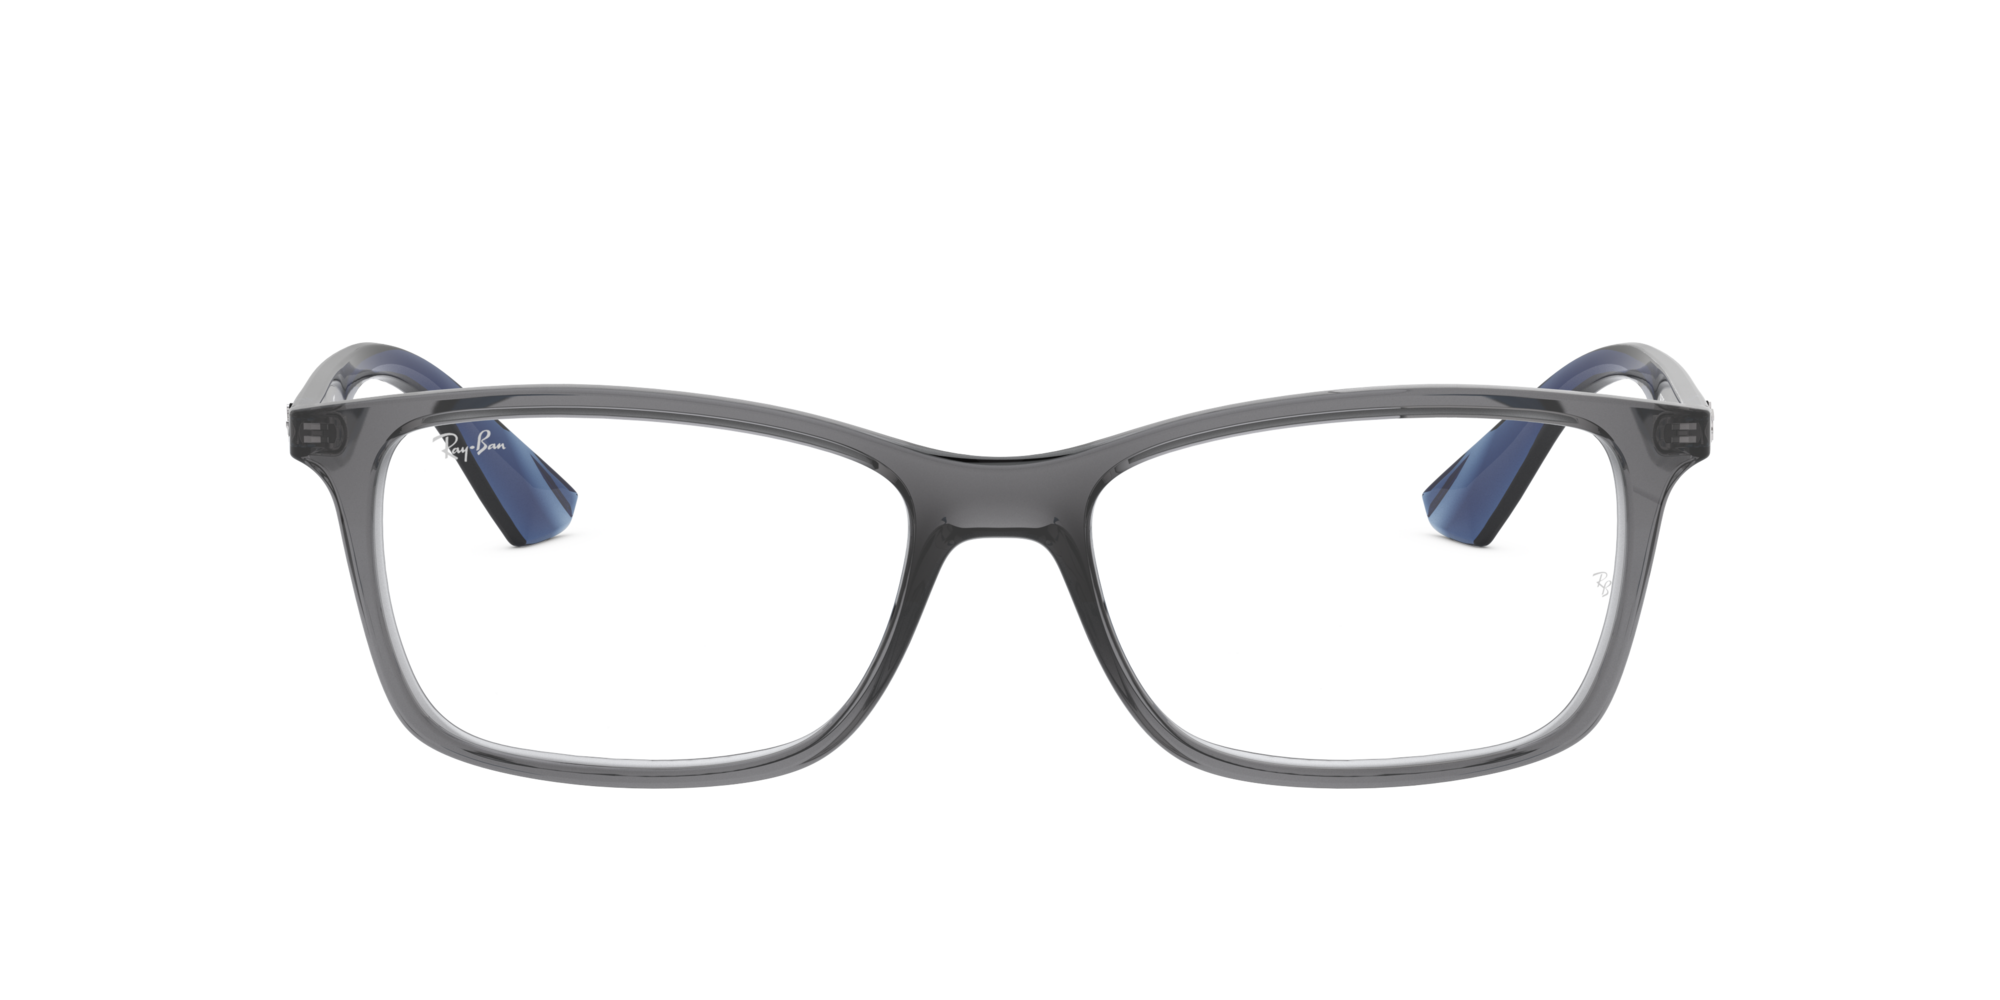 Ray Ban 0rx7047 Glasses In Silver Gunmetal Grey Target Optical